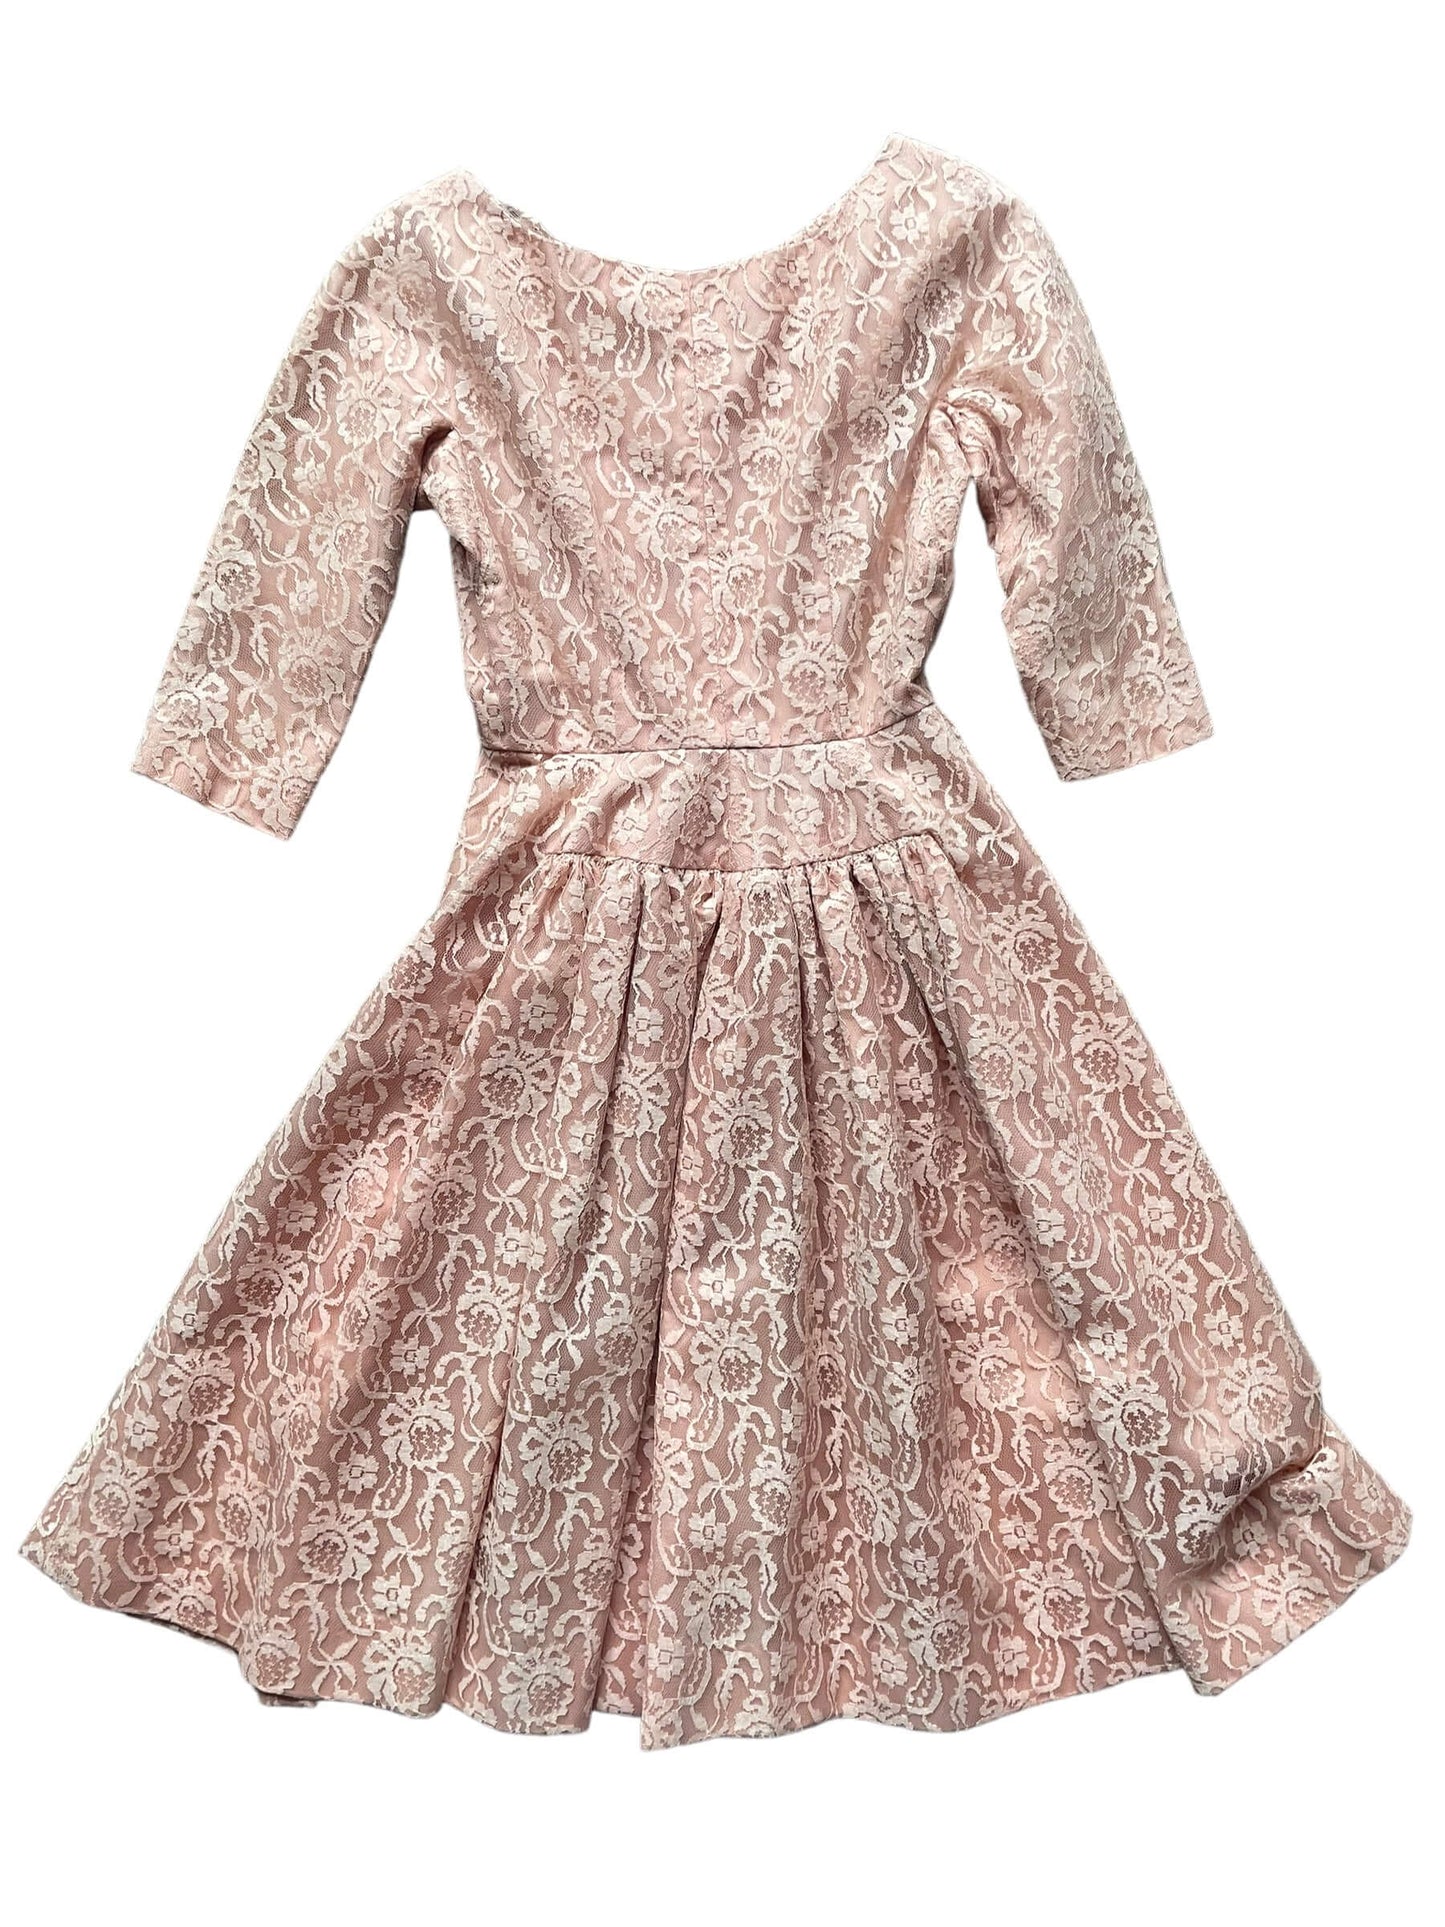 Full back view of Vintage 1950s Handmade Pink Lace Formal Dress |  Barn Owl Vintage Dresses | Seattle Vintage Ladies Clothing